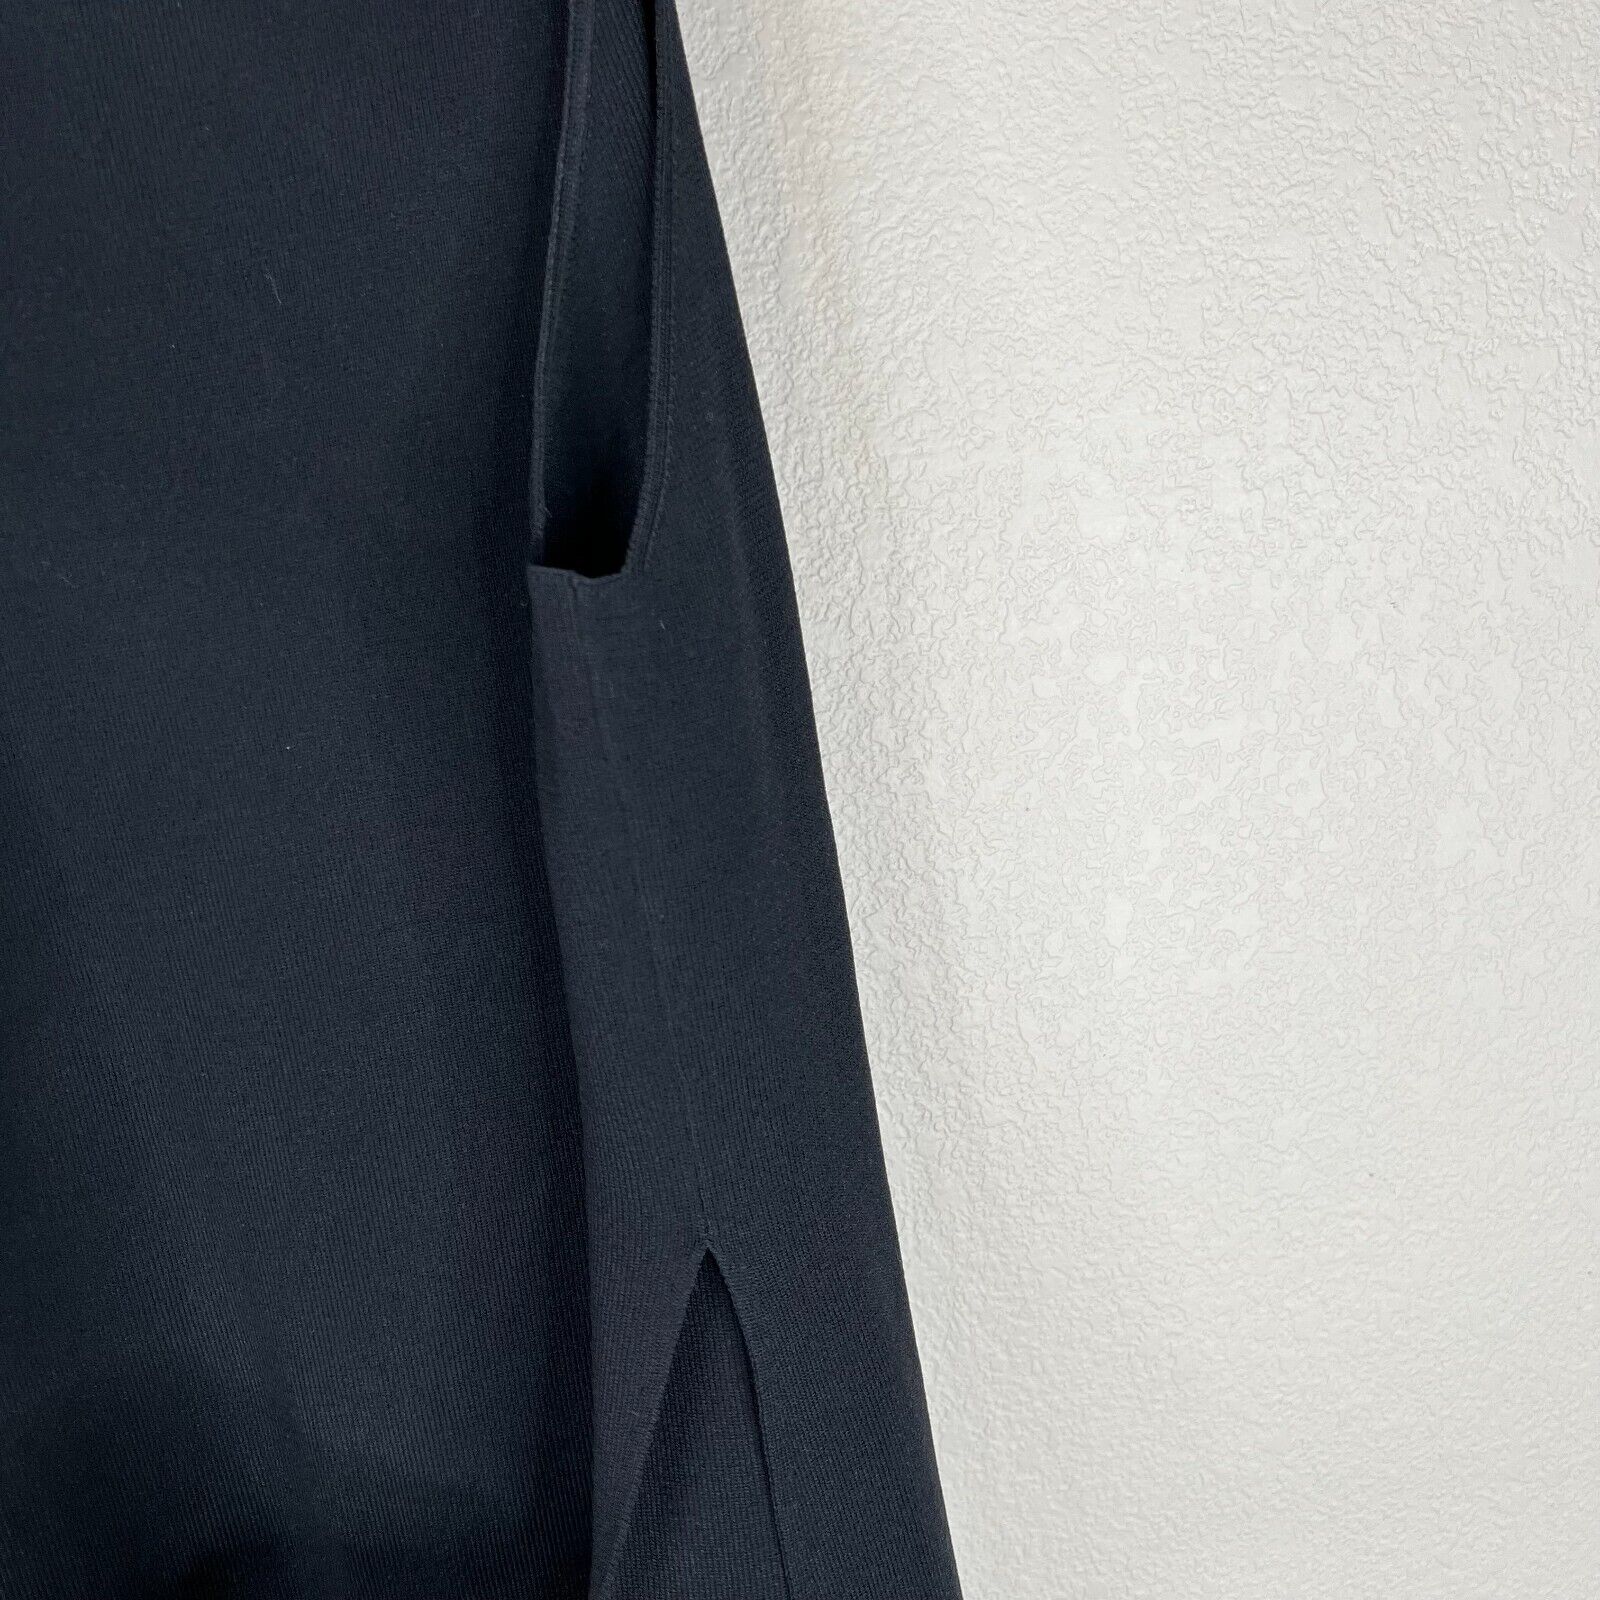 Intermix Tunic Top Size Medium Black Sleeveless M… - image 4